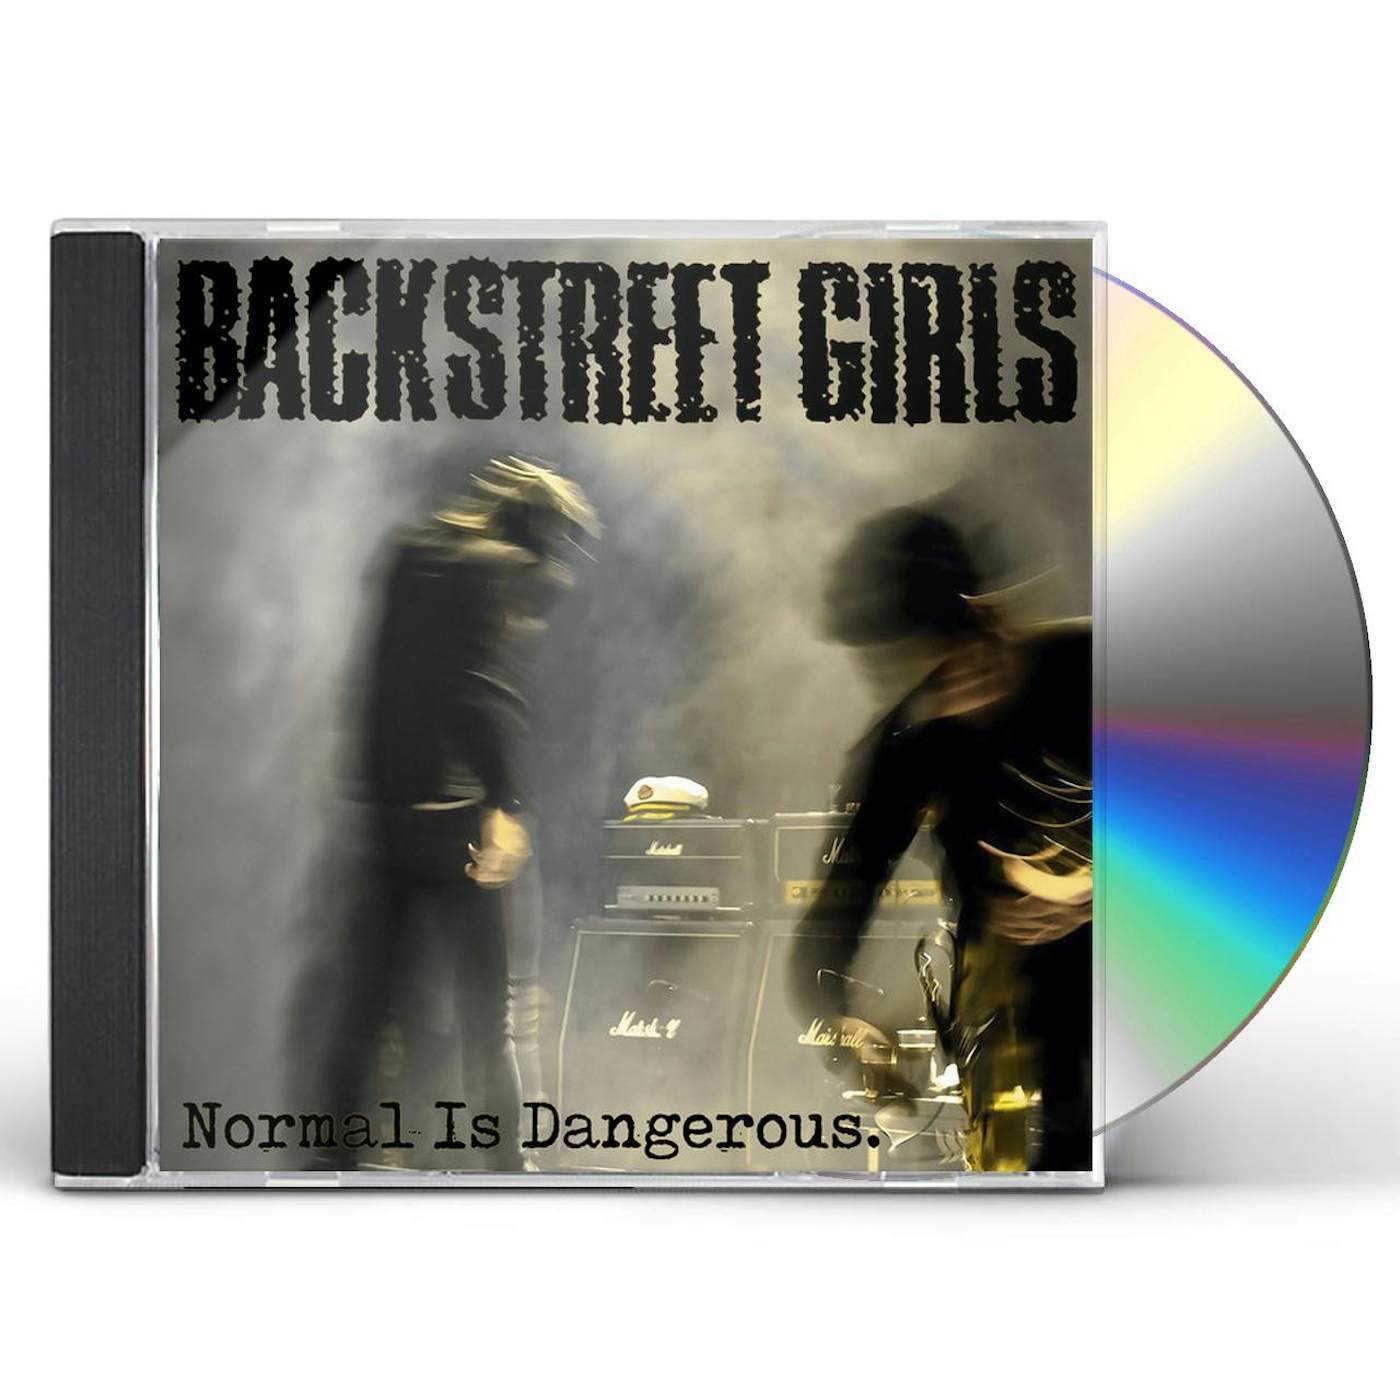 Backstreet Girls NORMAL IS DANGEROUS CD